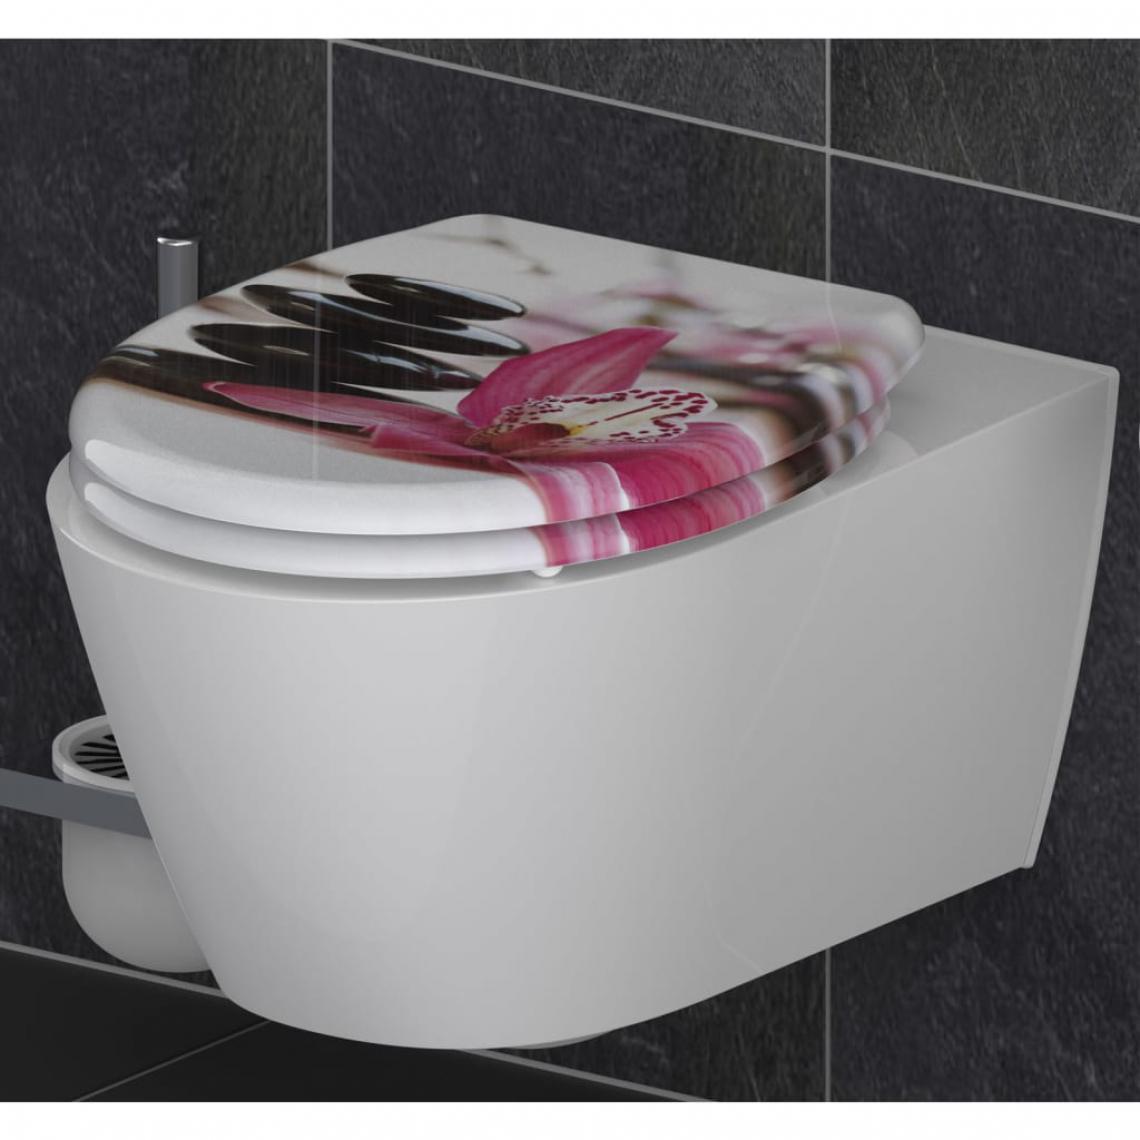 Schutte - SCHÜTTE Siège de toilette avec fermeture en douceur WELLYNESS - Abattant WC